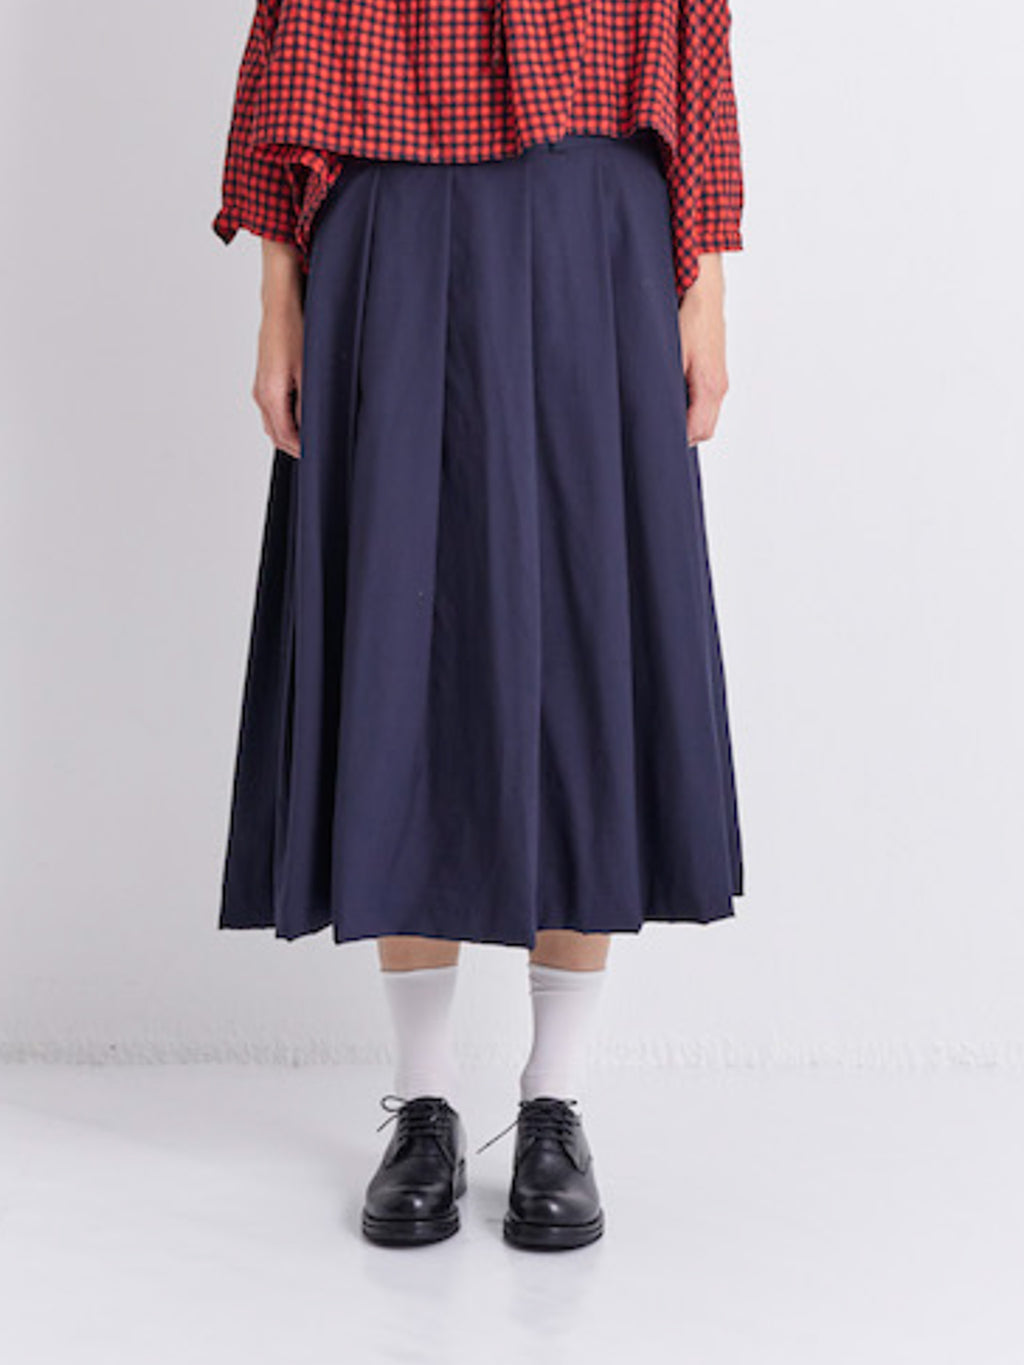 Namu Shop - Veritecoeur Pleated Skirt - Navy